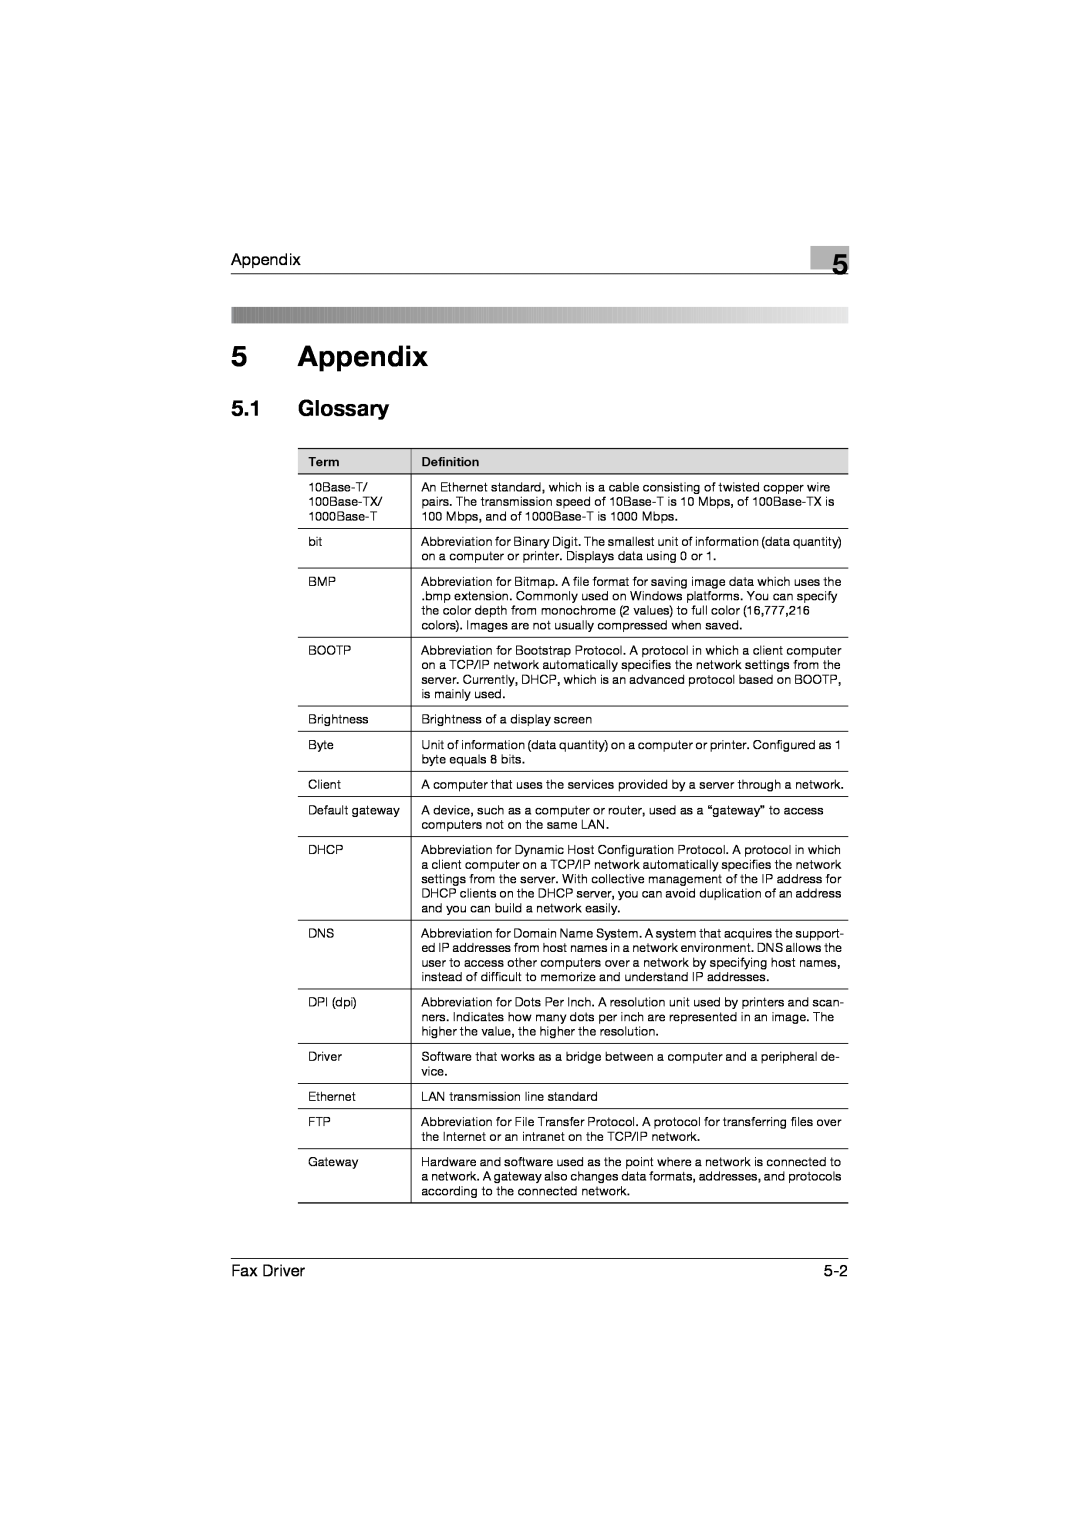 Konica Minolta 282, 222, 362 manual 5Appendix, 5.1Glossary, Term, Definition 